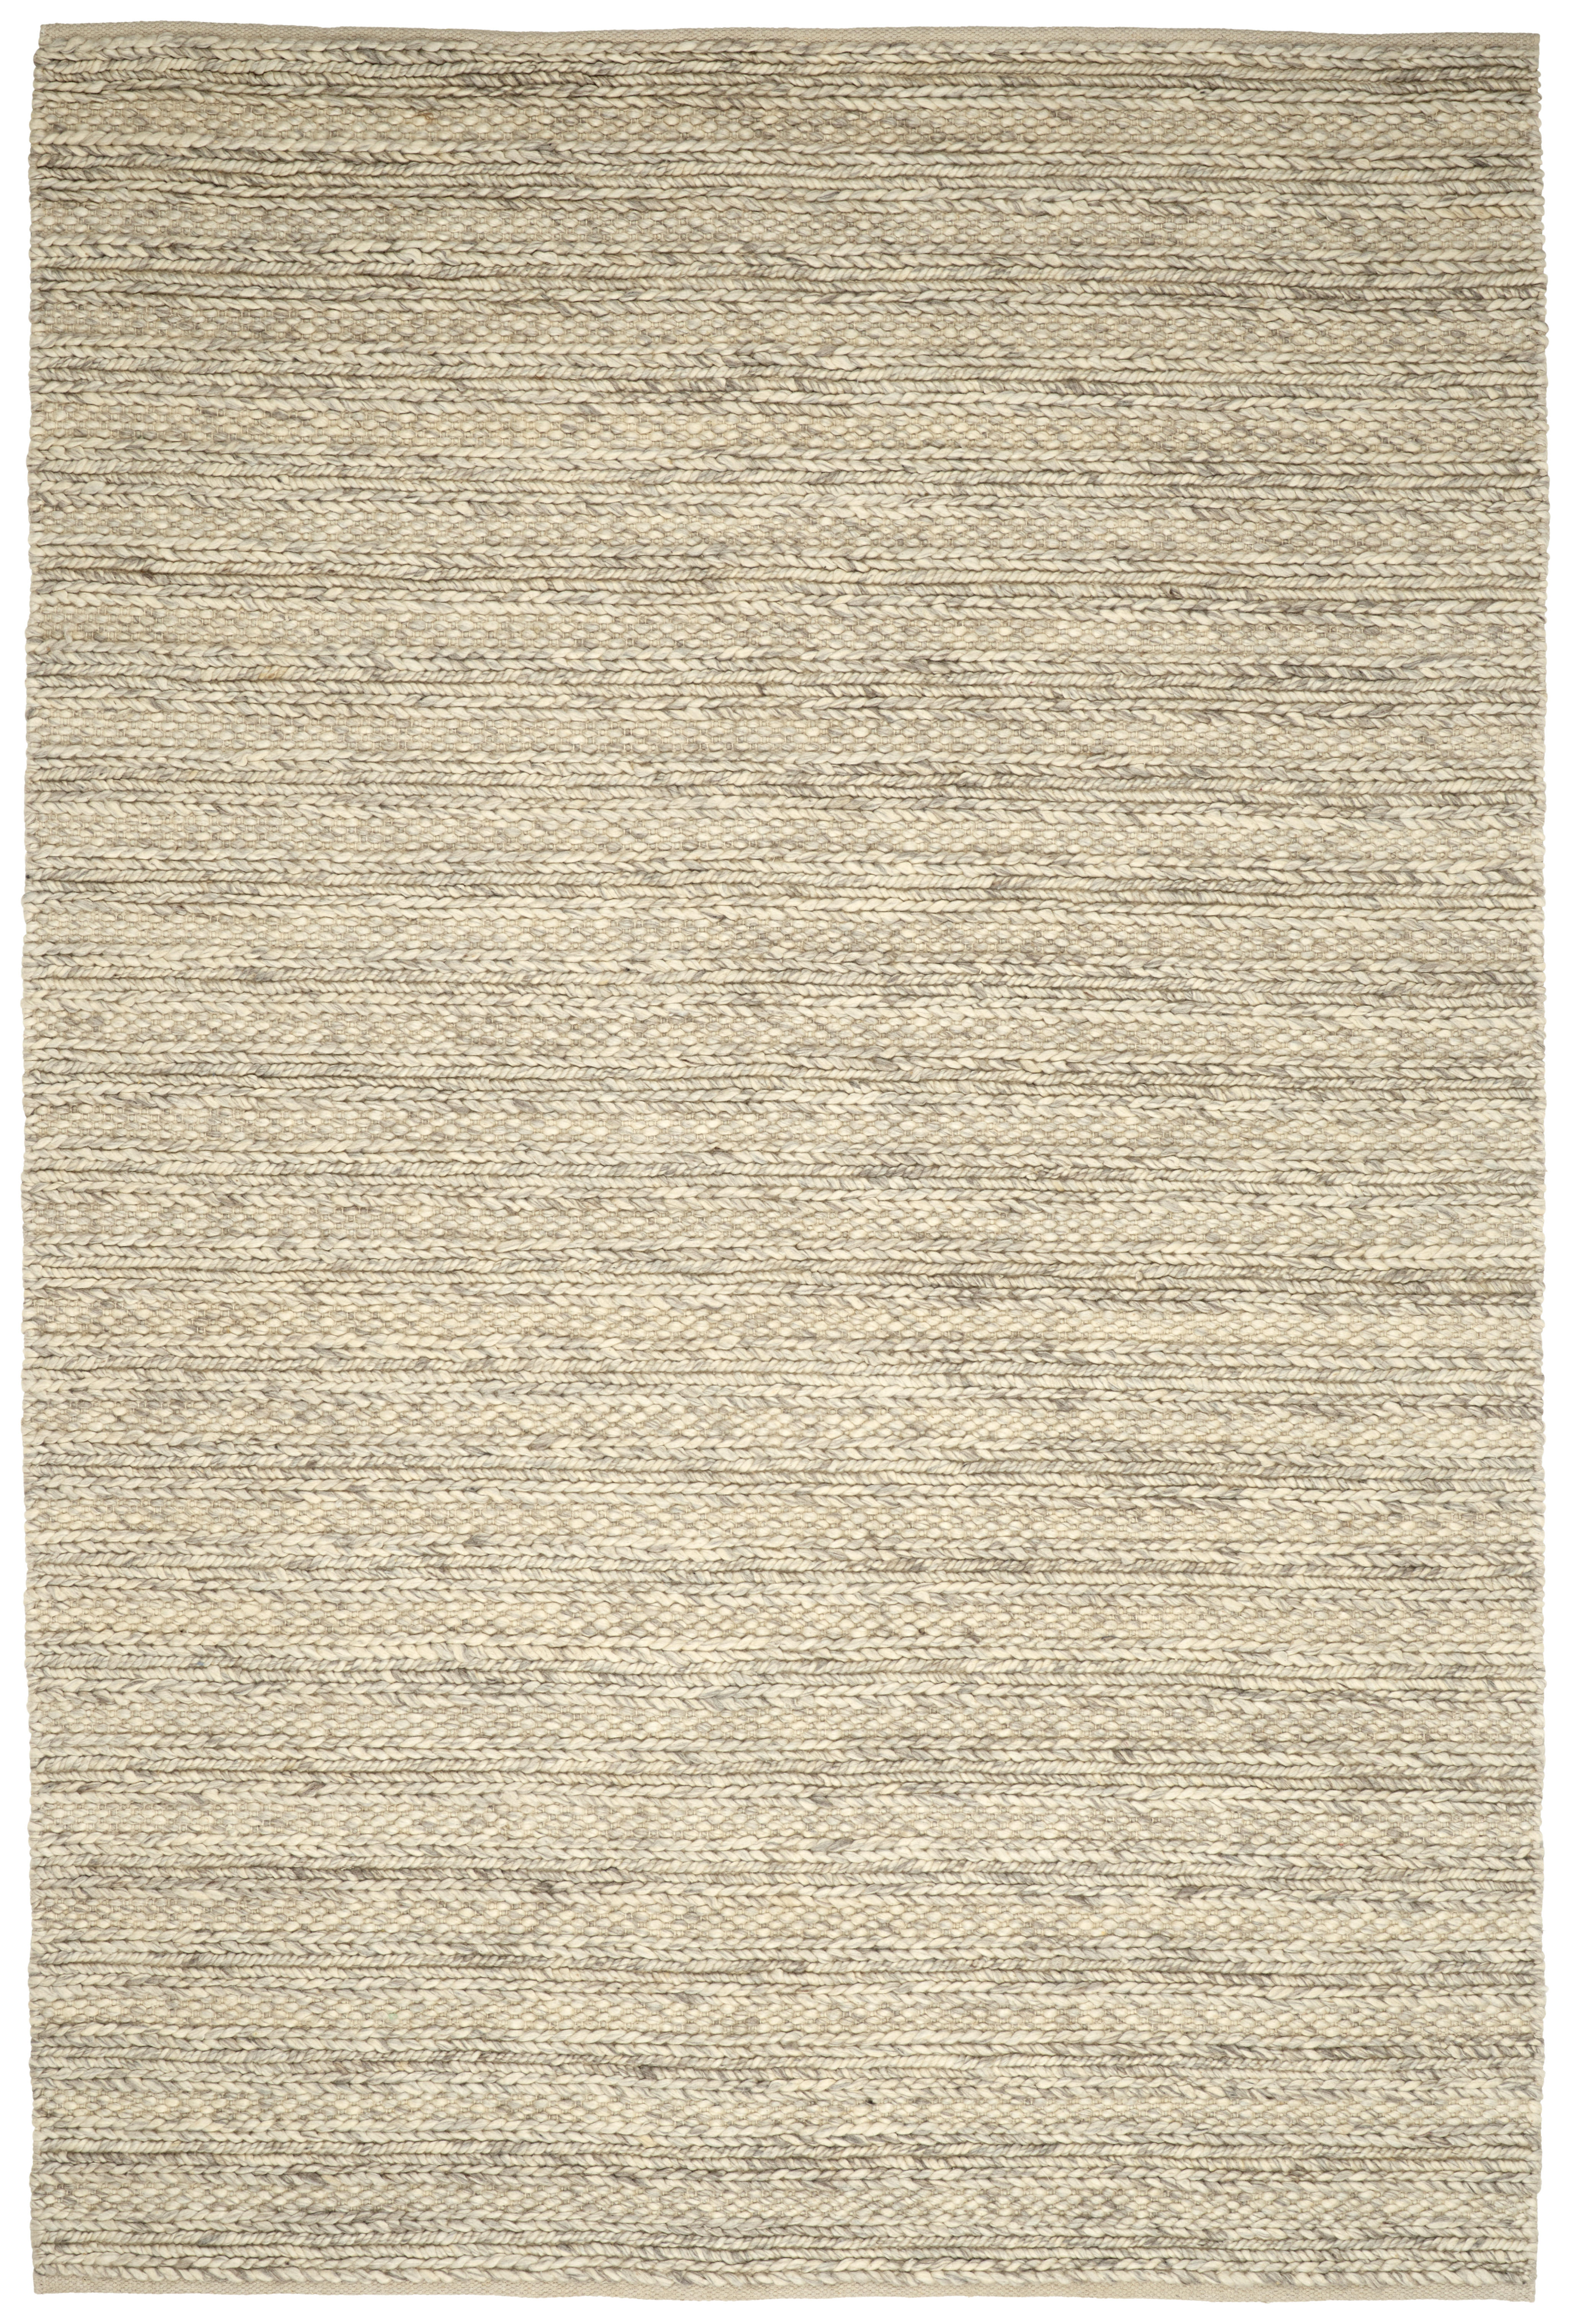 RUČNO TKANI TEPIH  srebrne boje     - srebrne boje, Natur, tekstil (160/230cm) - Linea Natura